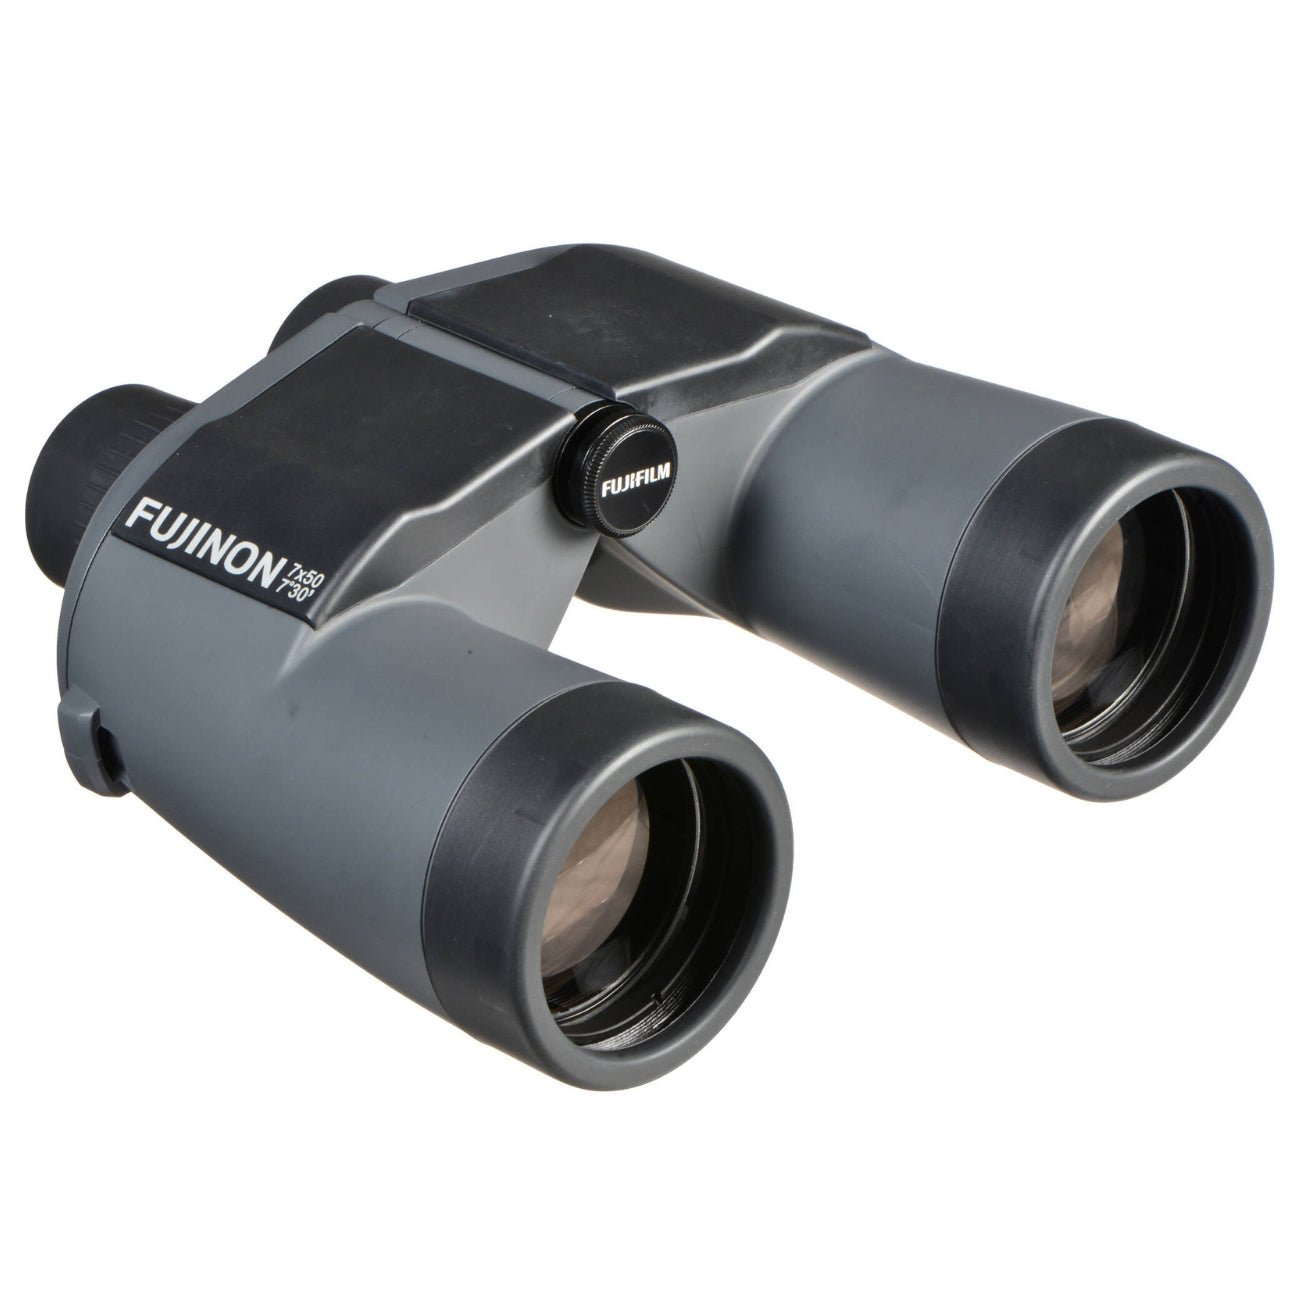 Fujinon 7x50 WP-XL Mariner Binoculars / waterproof binoculars for boating, 7 x 50, 7x50 binoculars